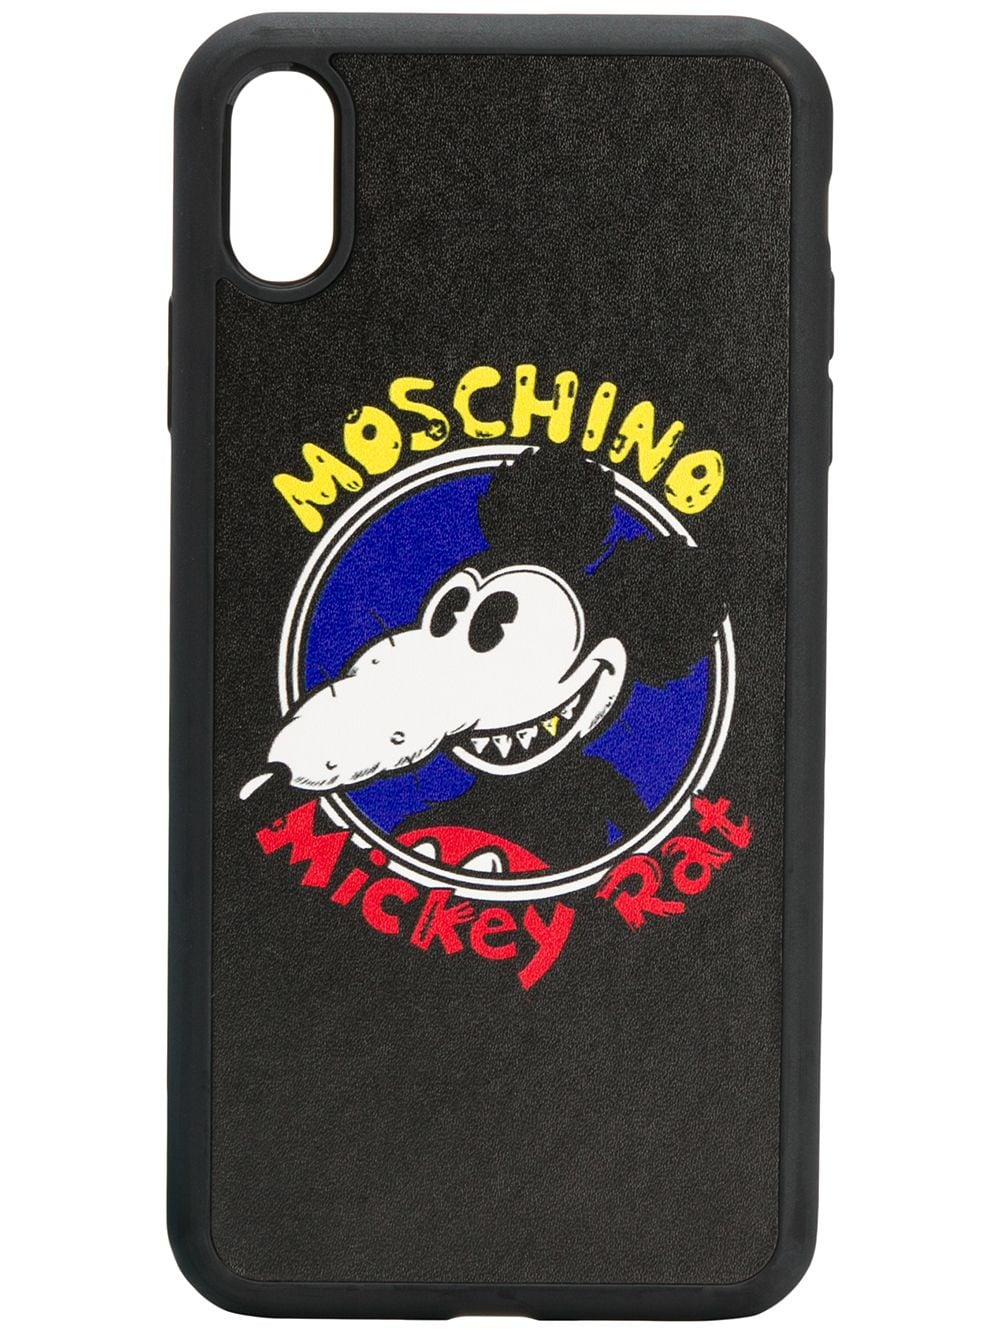 Moschino Mchino Iphone Xs Max Mickey Rat Phone Case in Black | Lyst